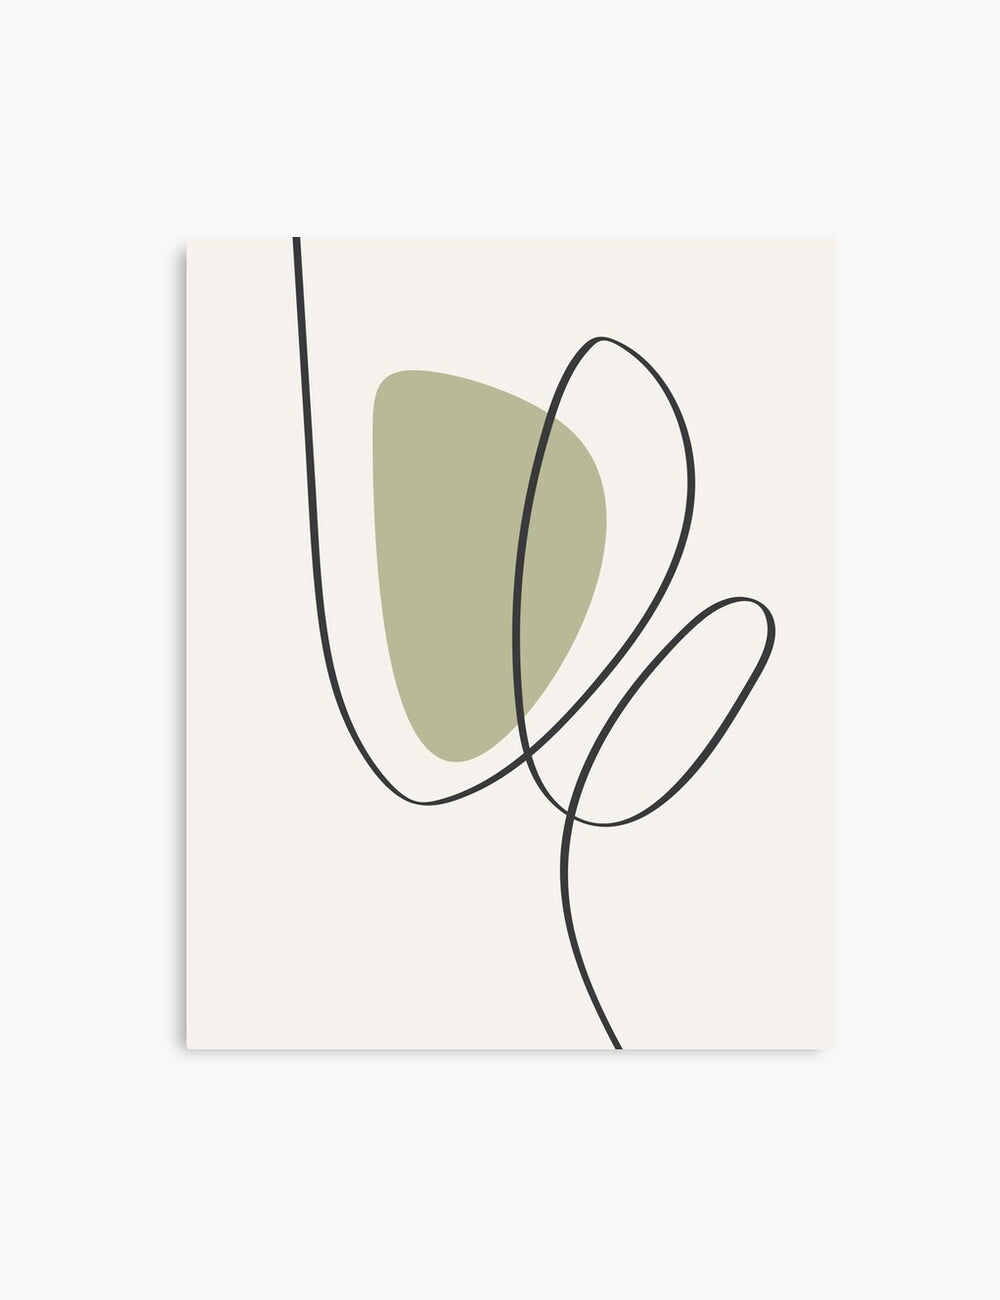 MINIMAL LINE ART. Abstract Shapes. Boho Aesthetic. Green. Beige. Black. Printable Wall Art Illustration. - PAPER MOON Art & Design